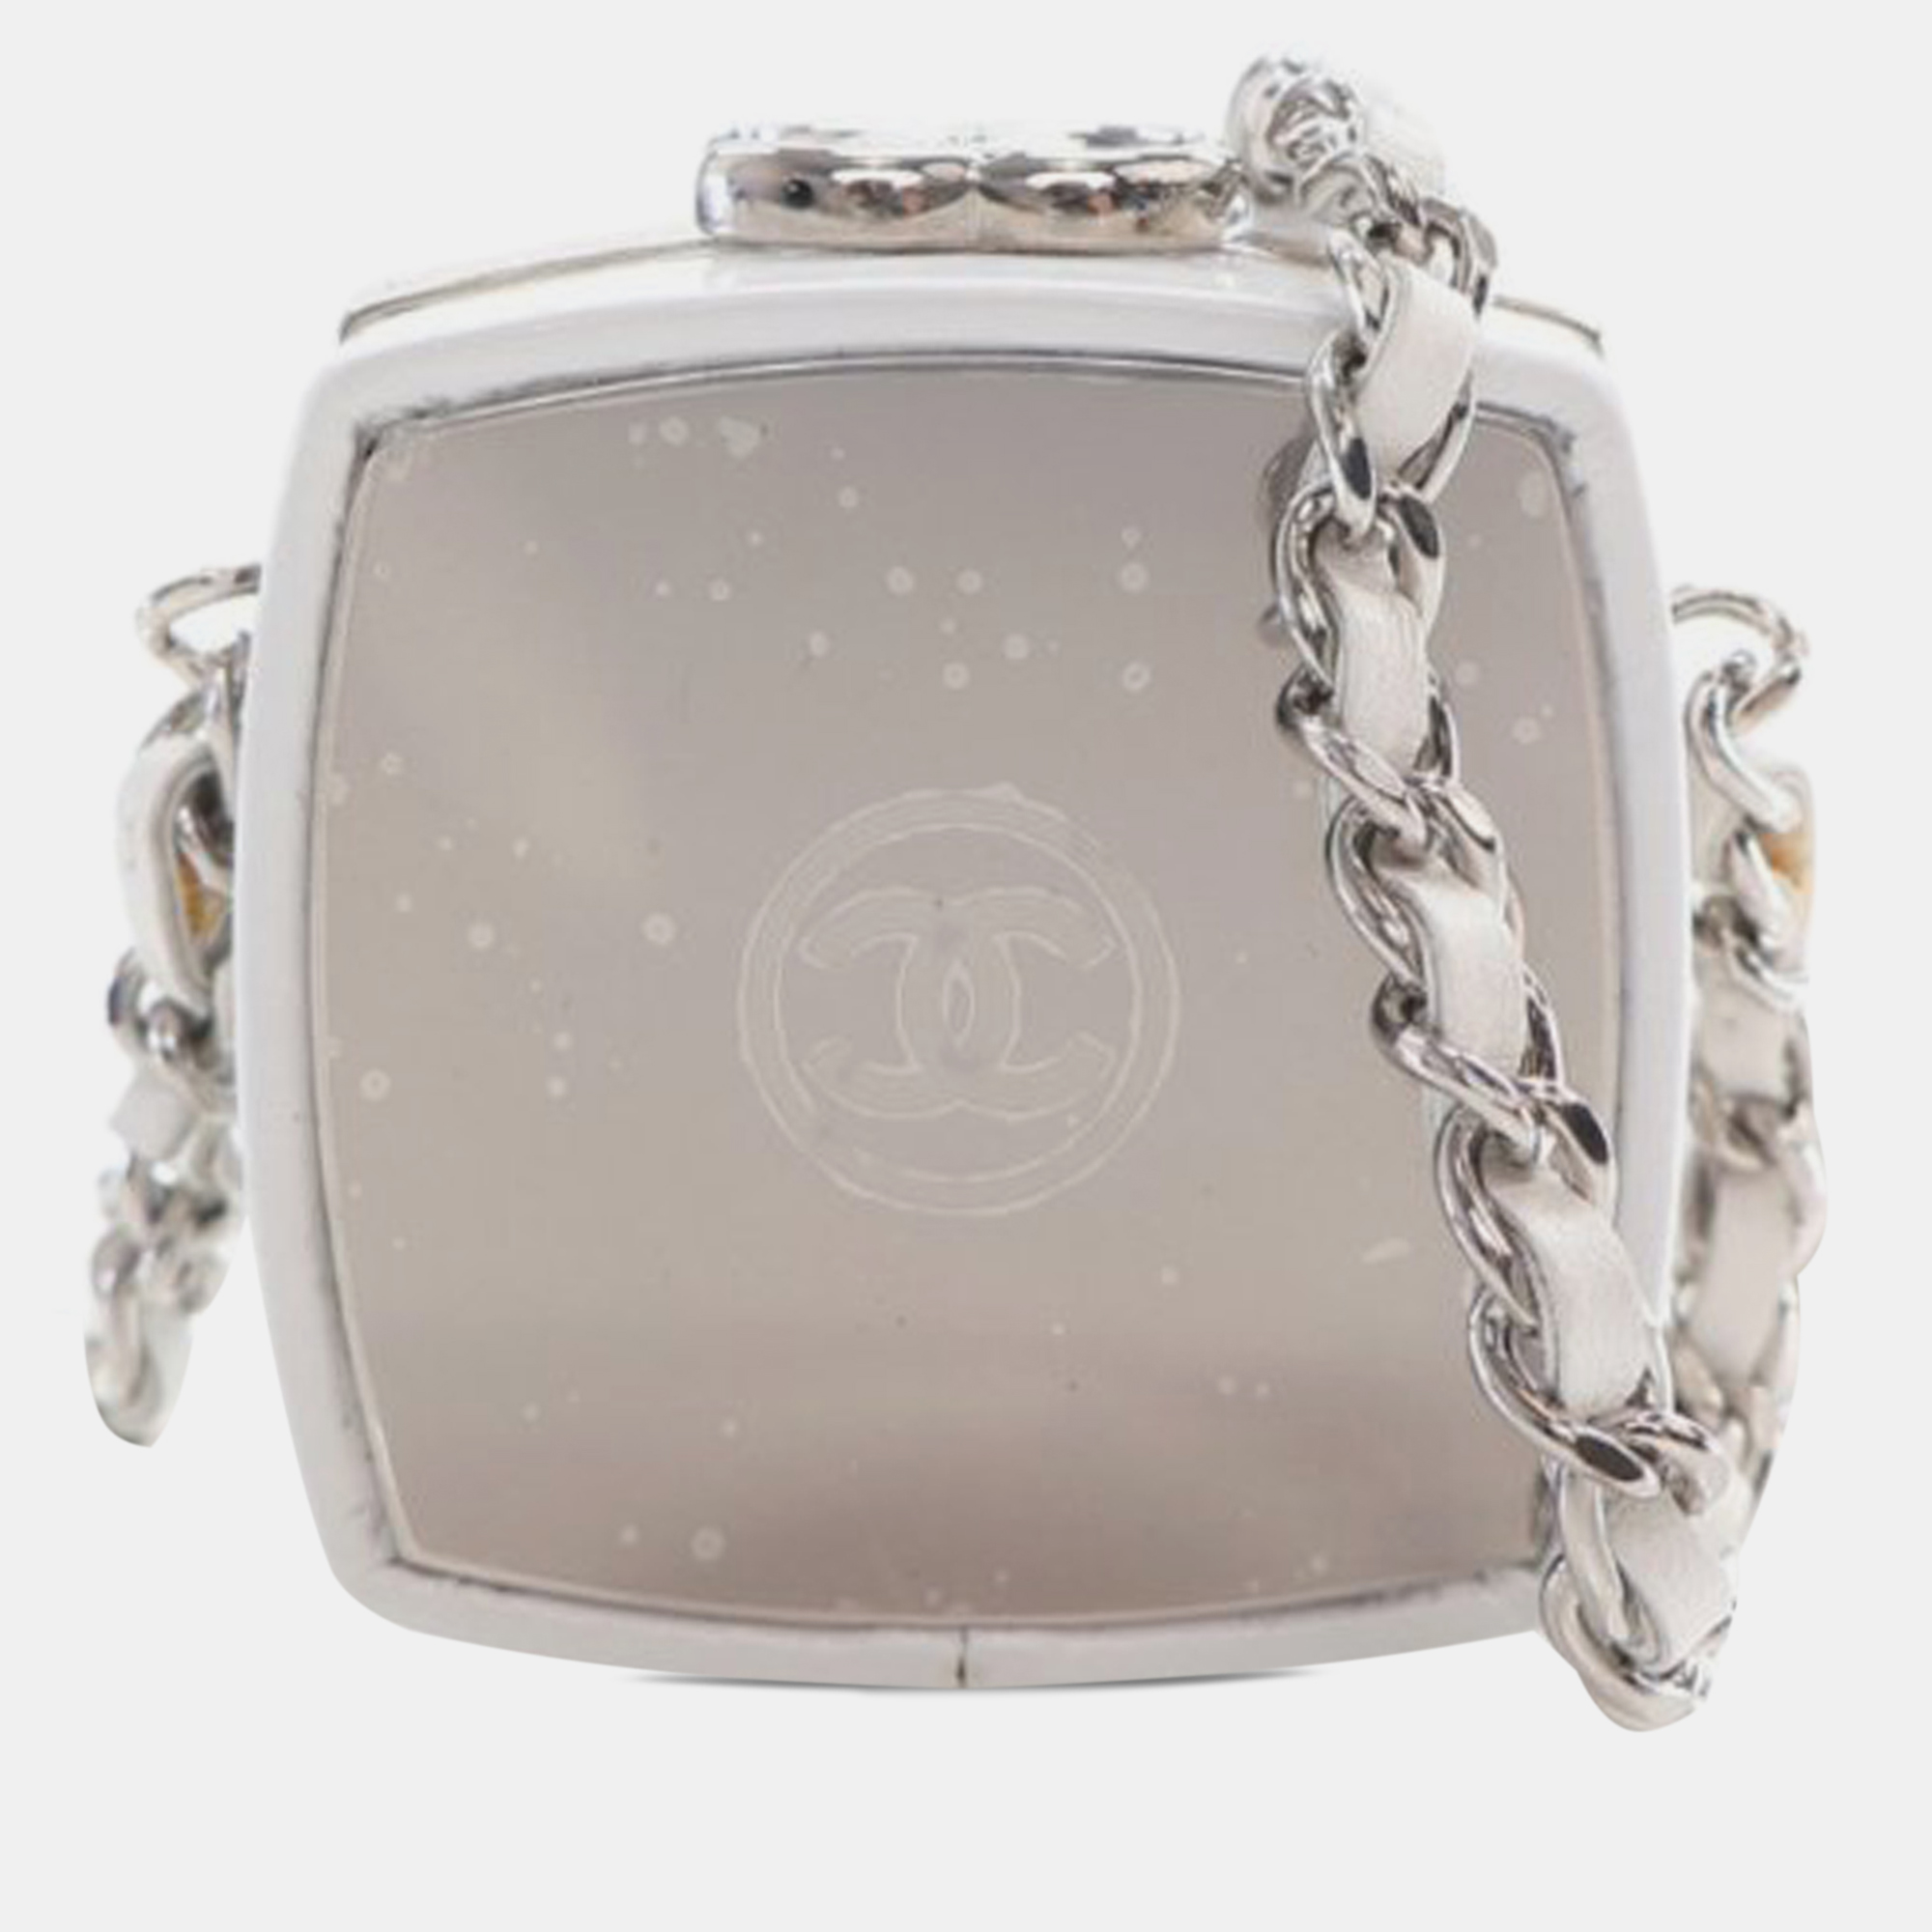 Chanel patent goatskin make-up box clutch with chain